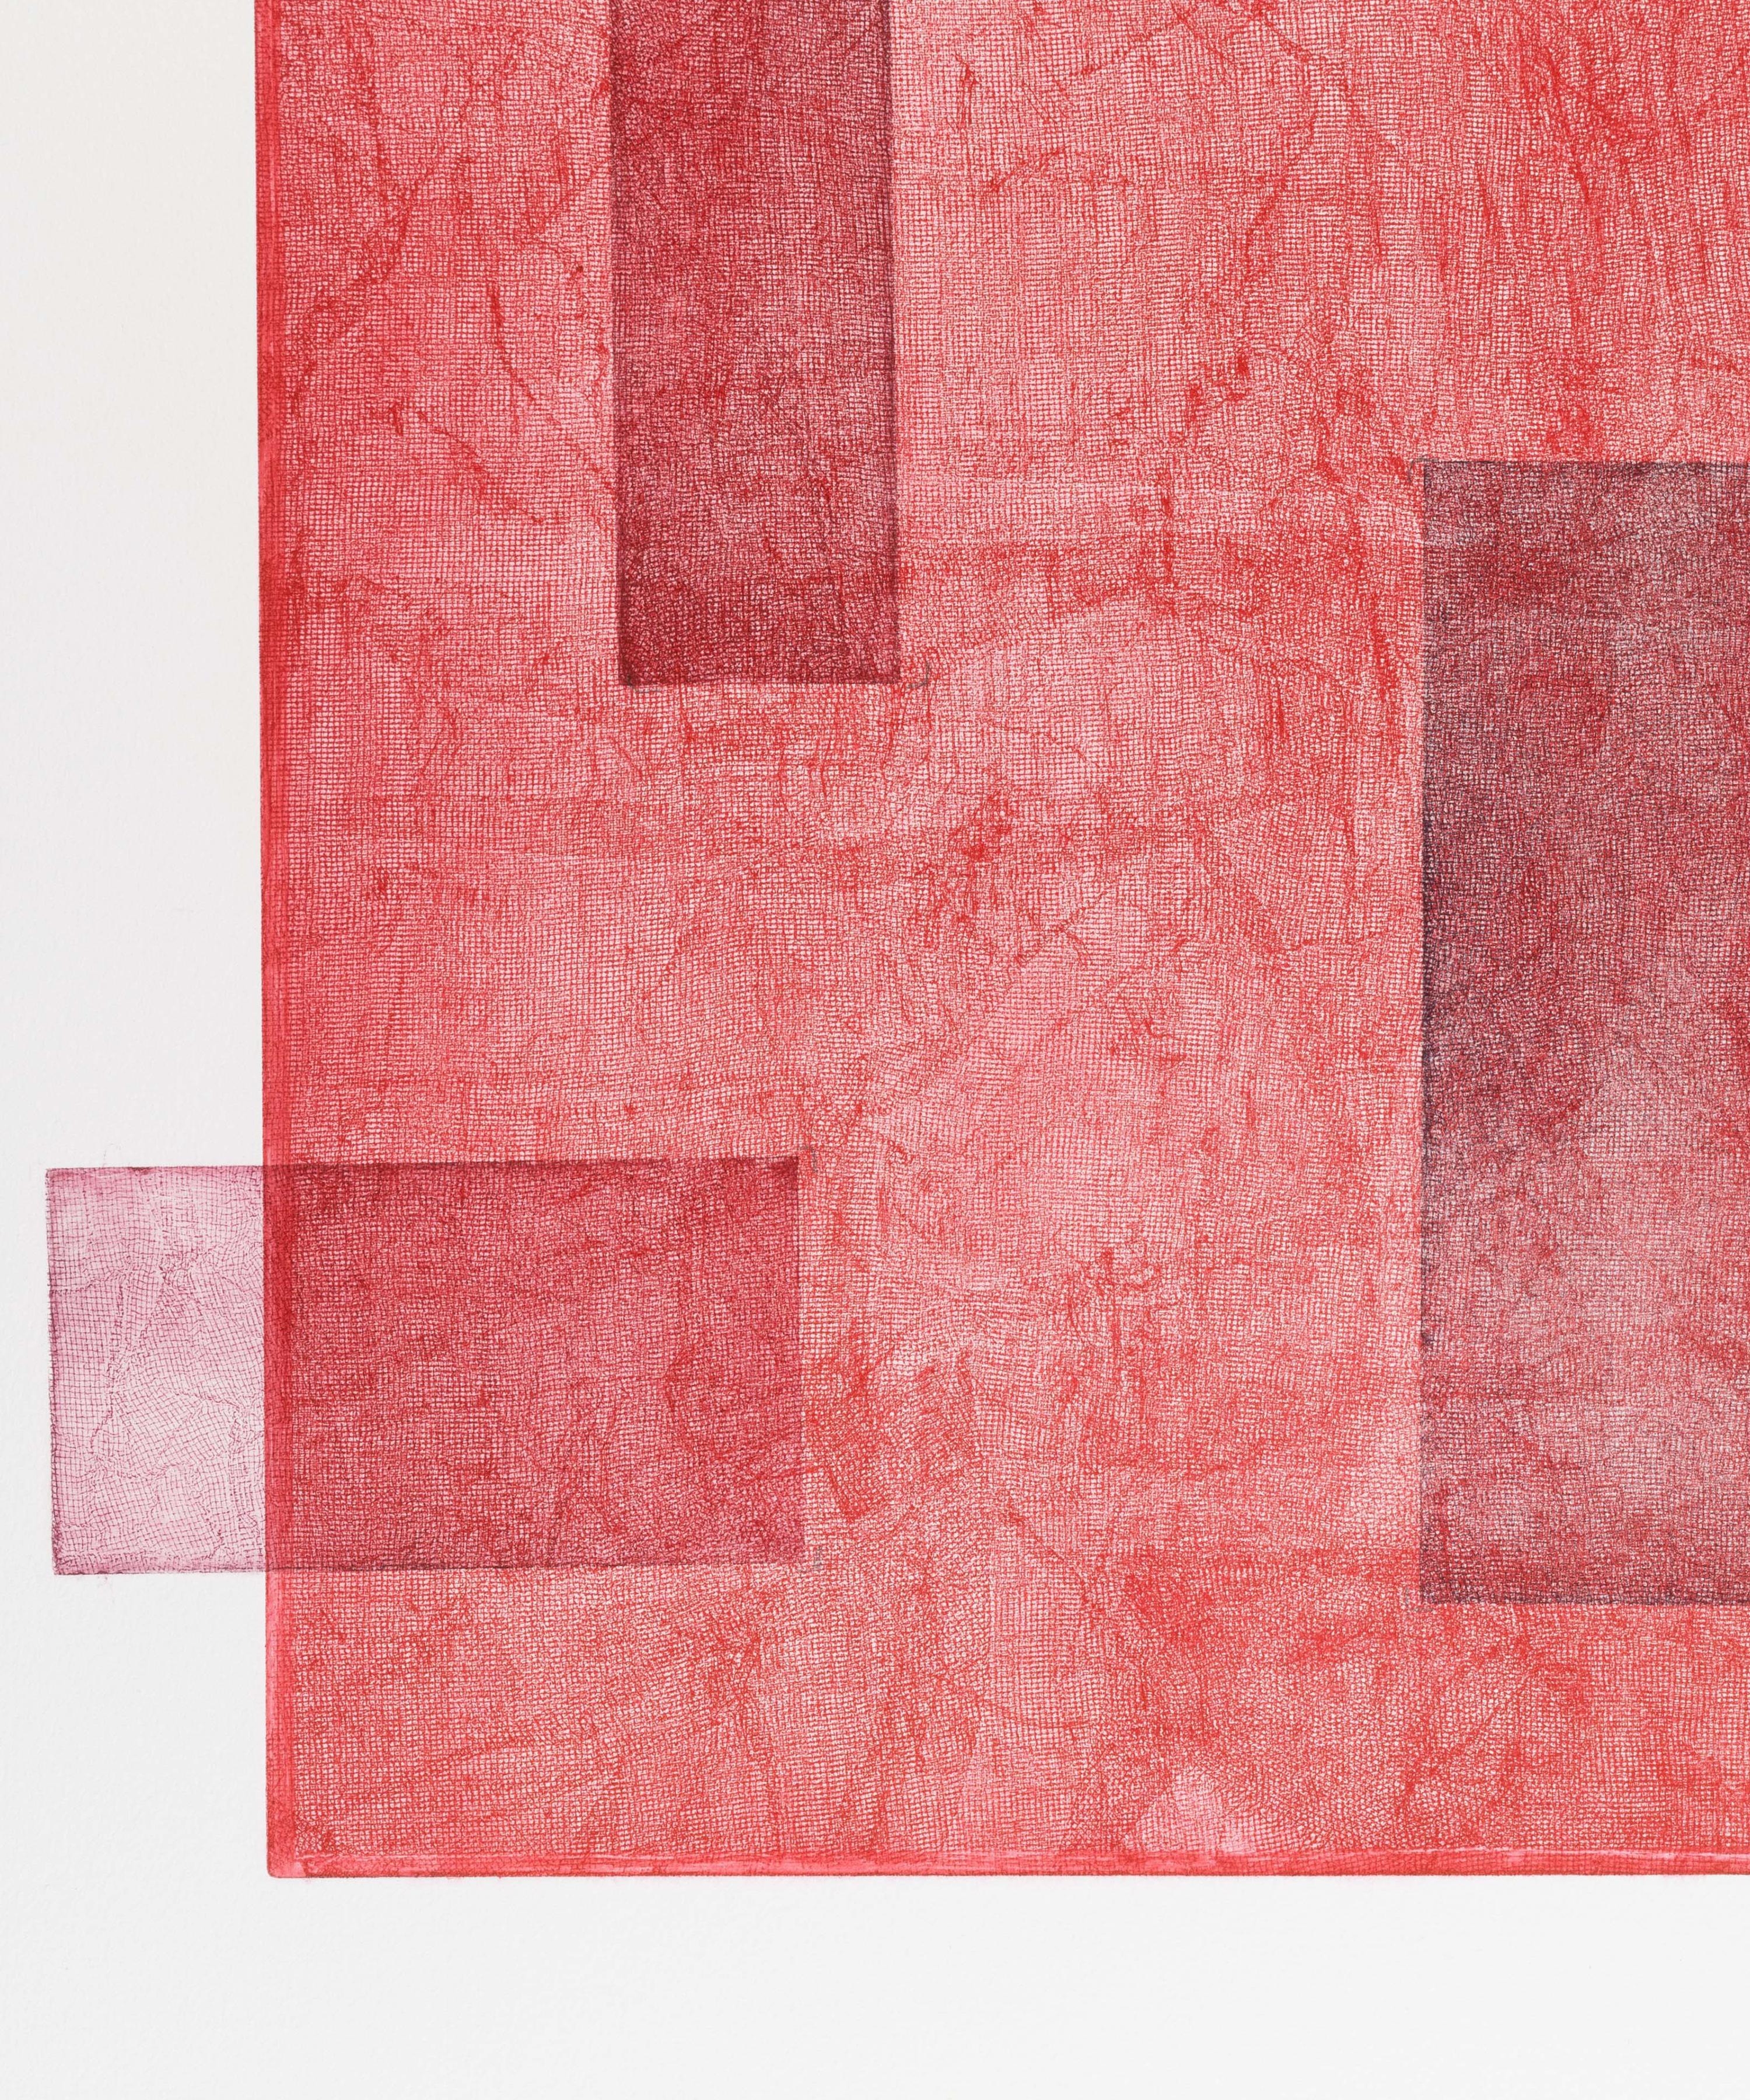 Blanket III, Photographic Etchings & Abstract Geometric Monoprint, 2022 - Print by Debra Pearlman